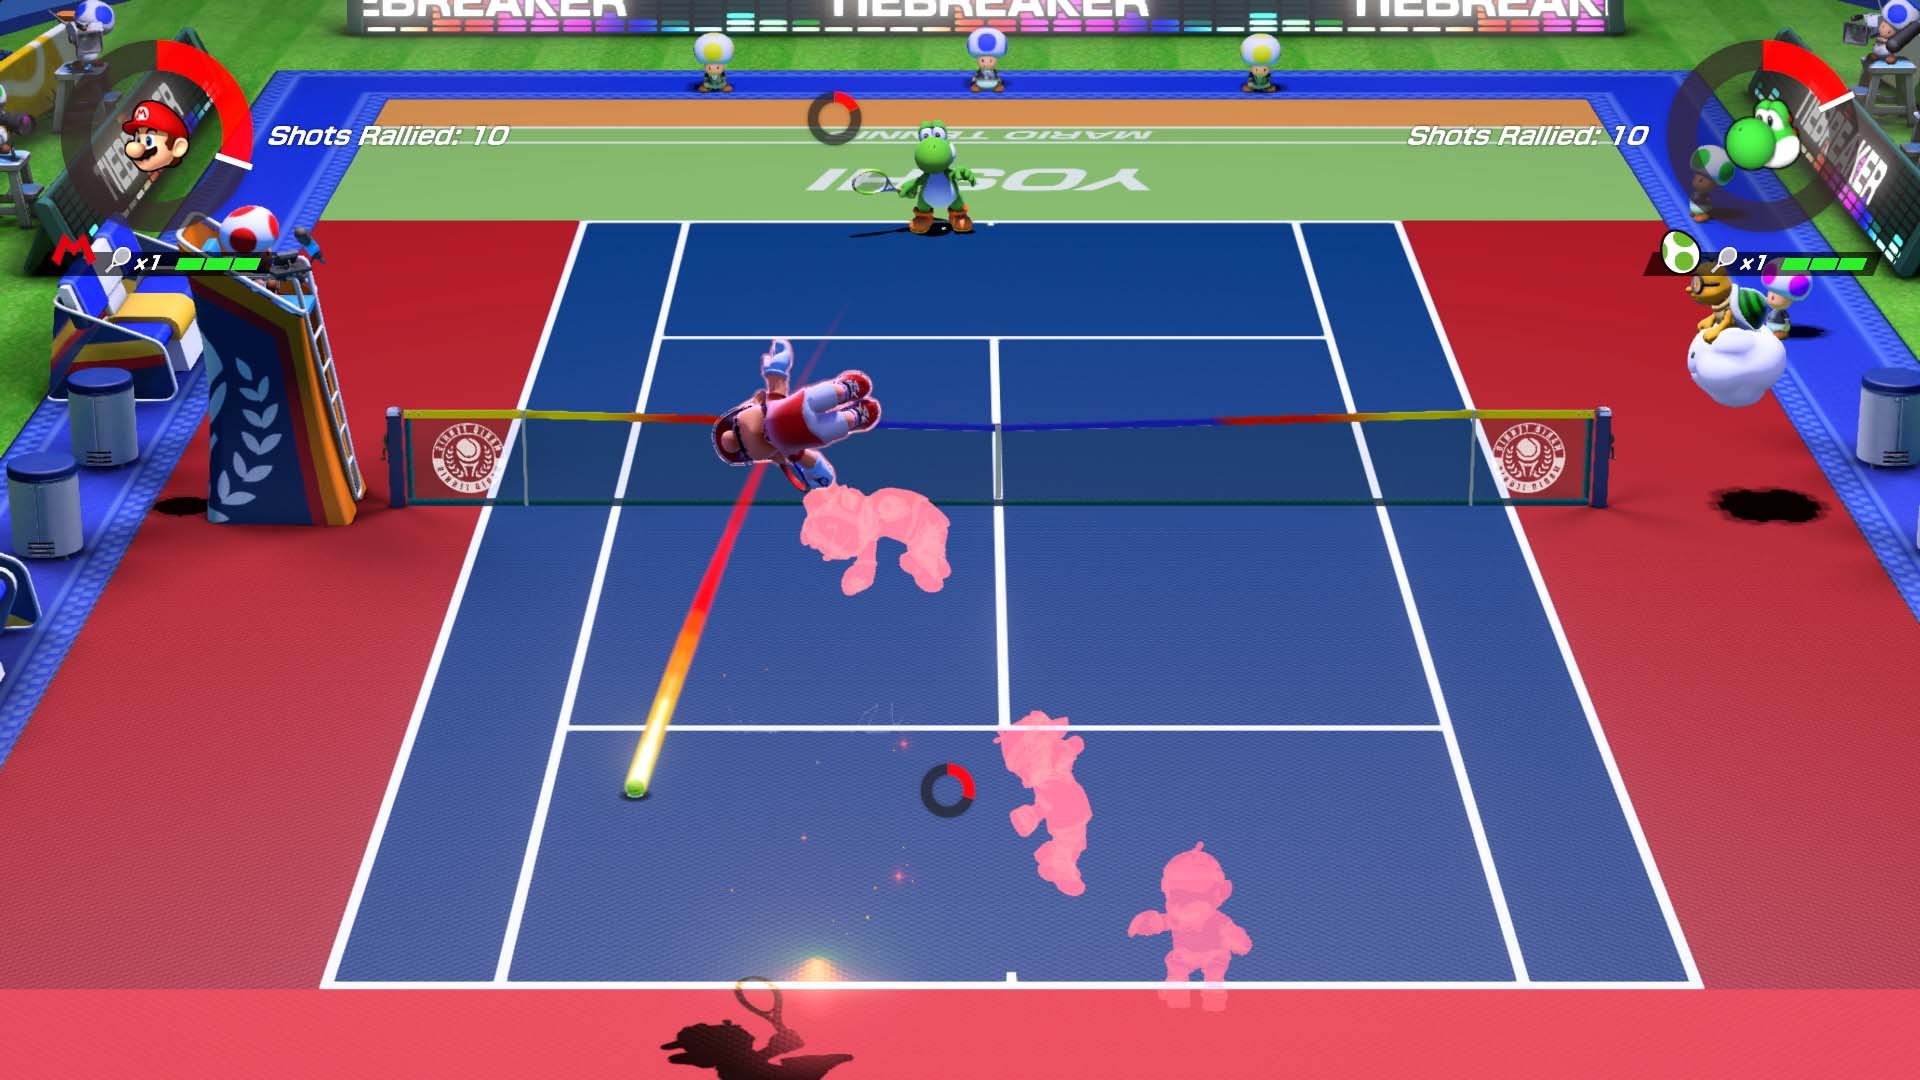 Review | (Switch) Life Nintendo Aces Tennis Mario